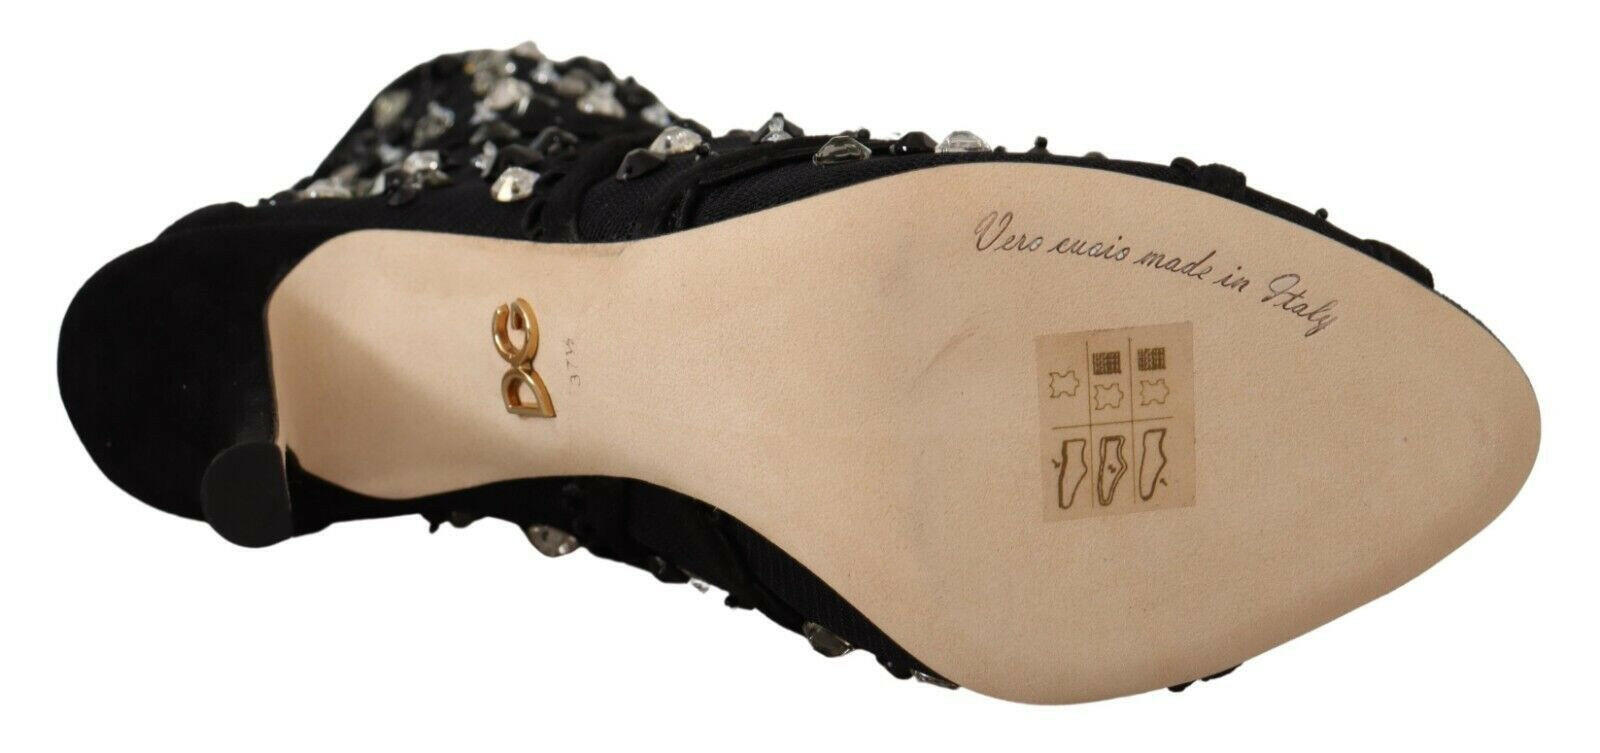 Dolce & Gabbana Black Crystals Heels Zipper Short Boots Shoes - GENUINE AUTHENTIC BRAND LLC  